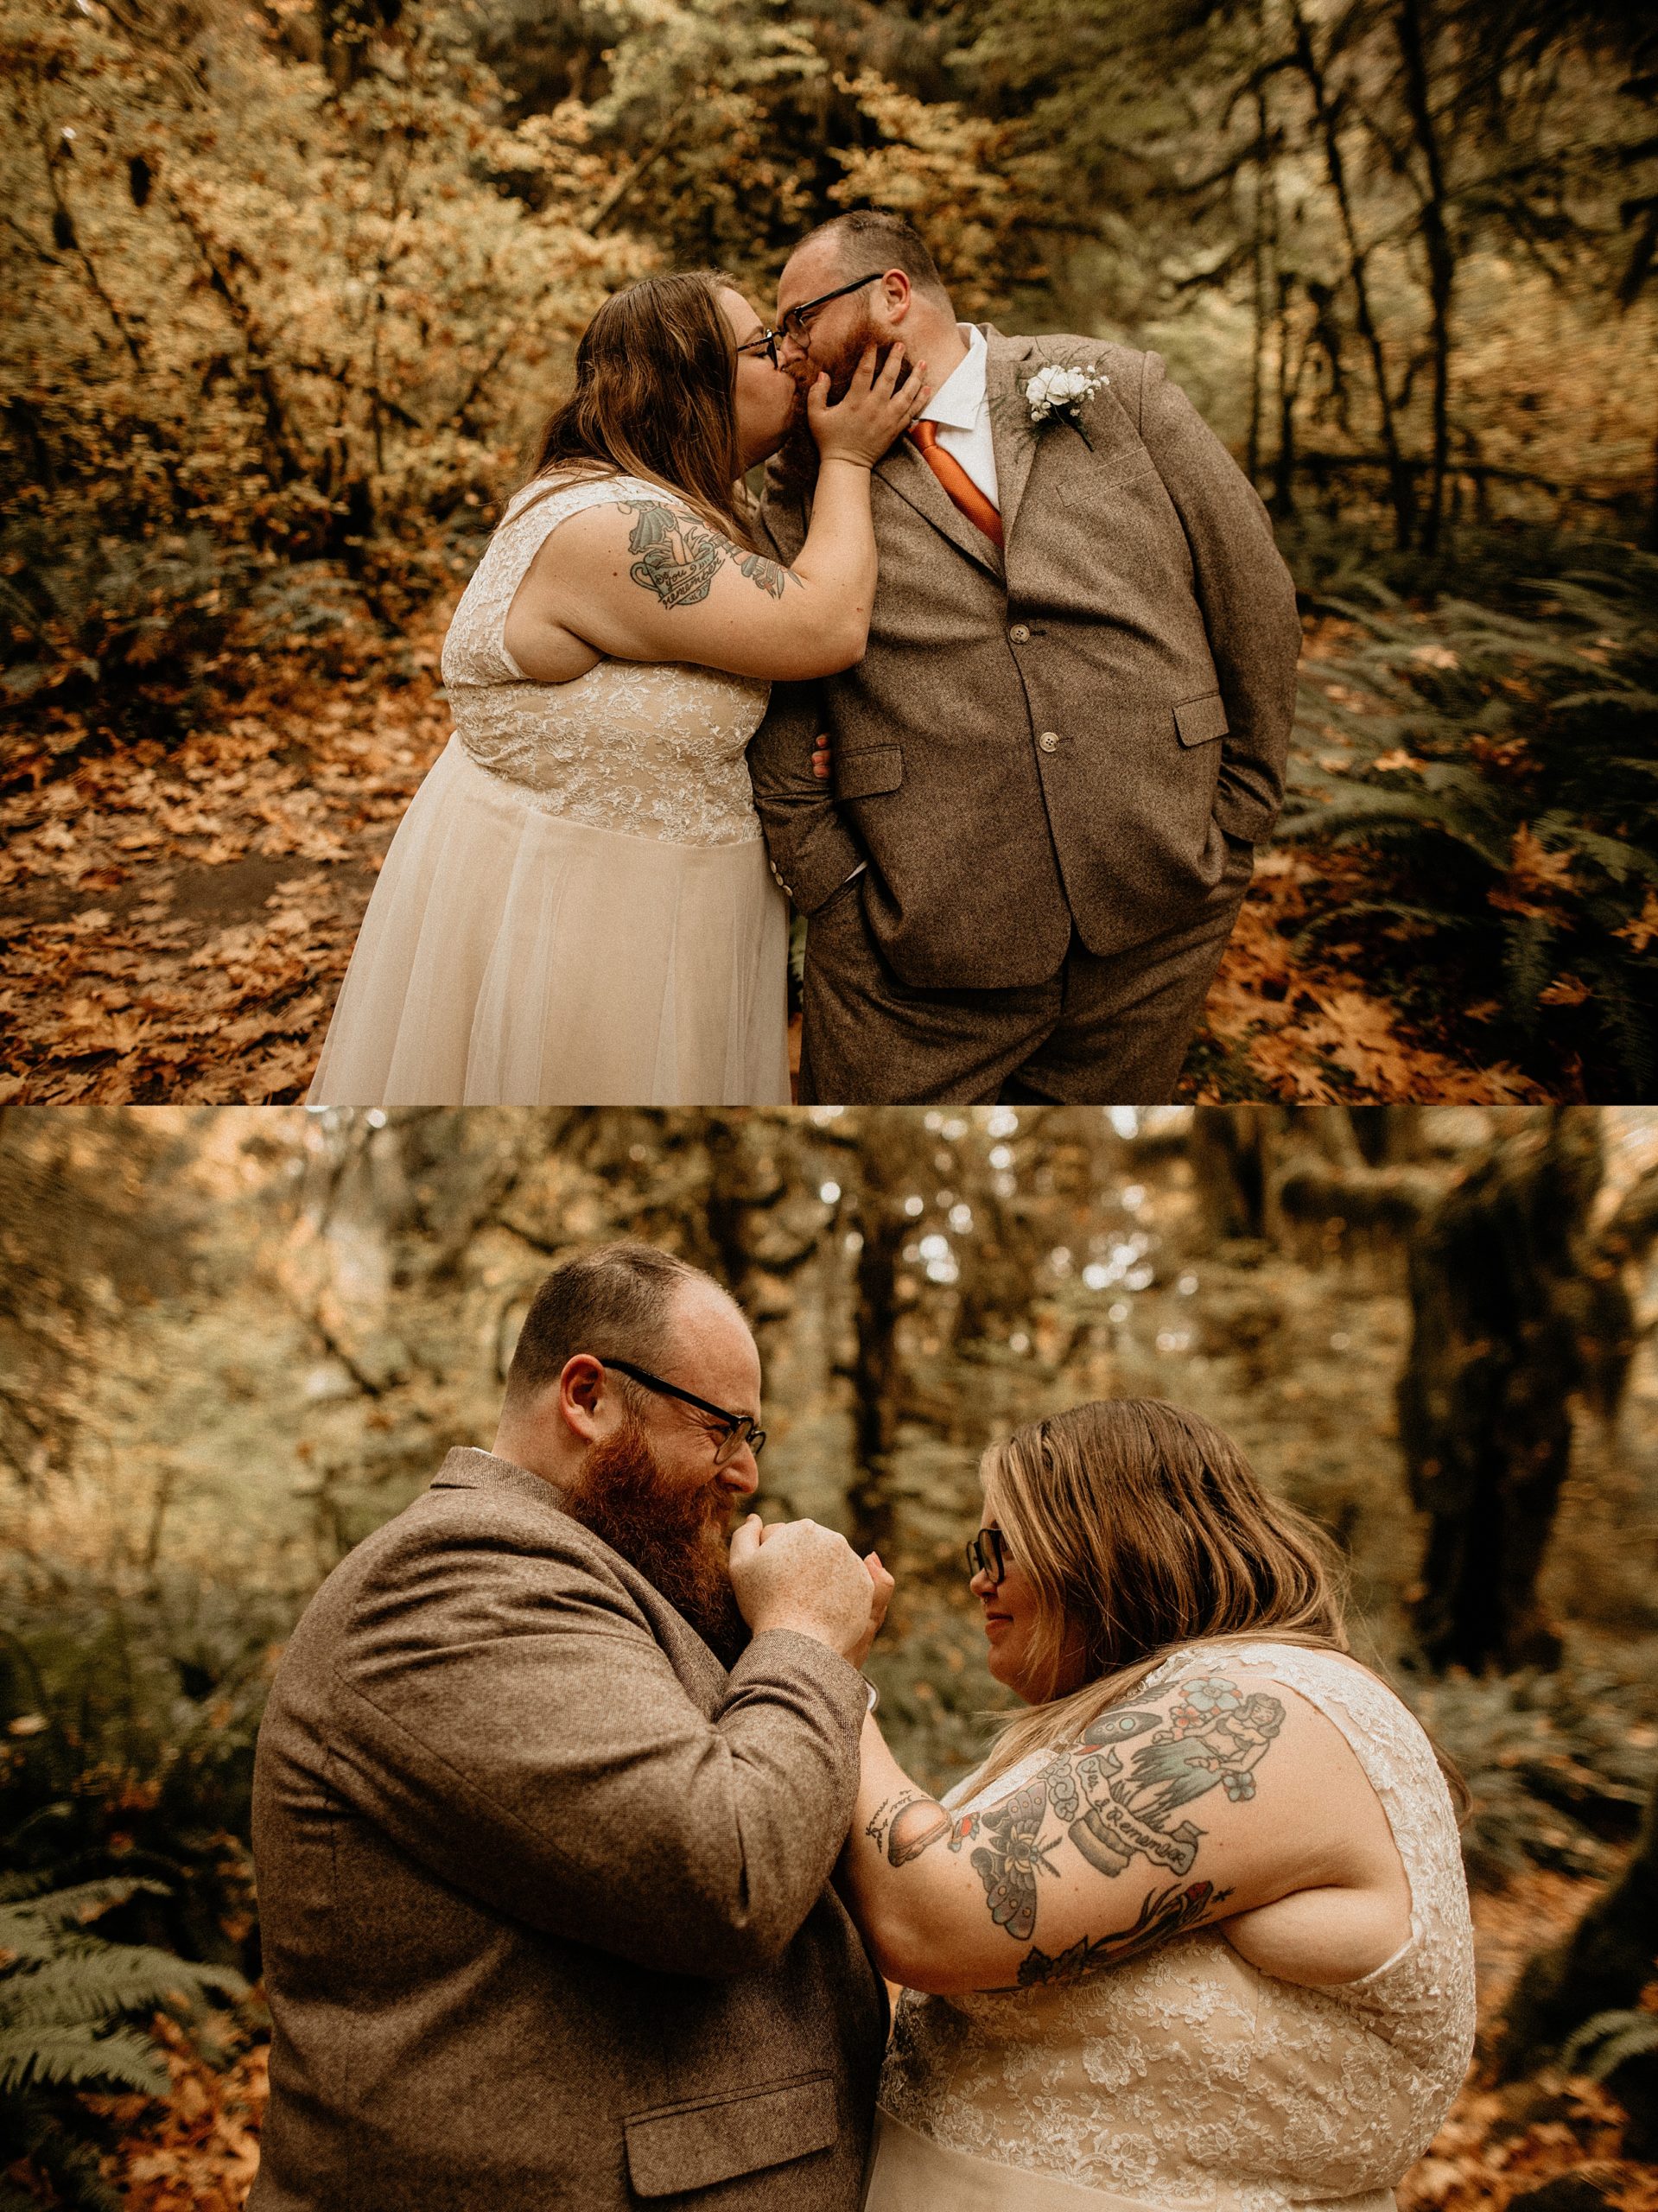 bride and groom kissing forest landscape

